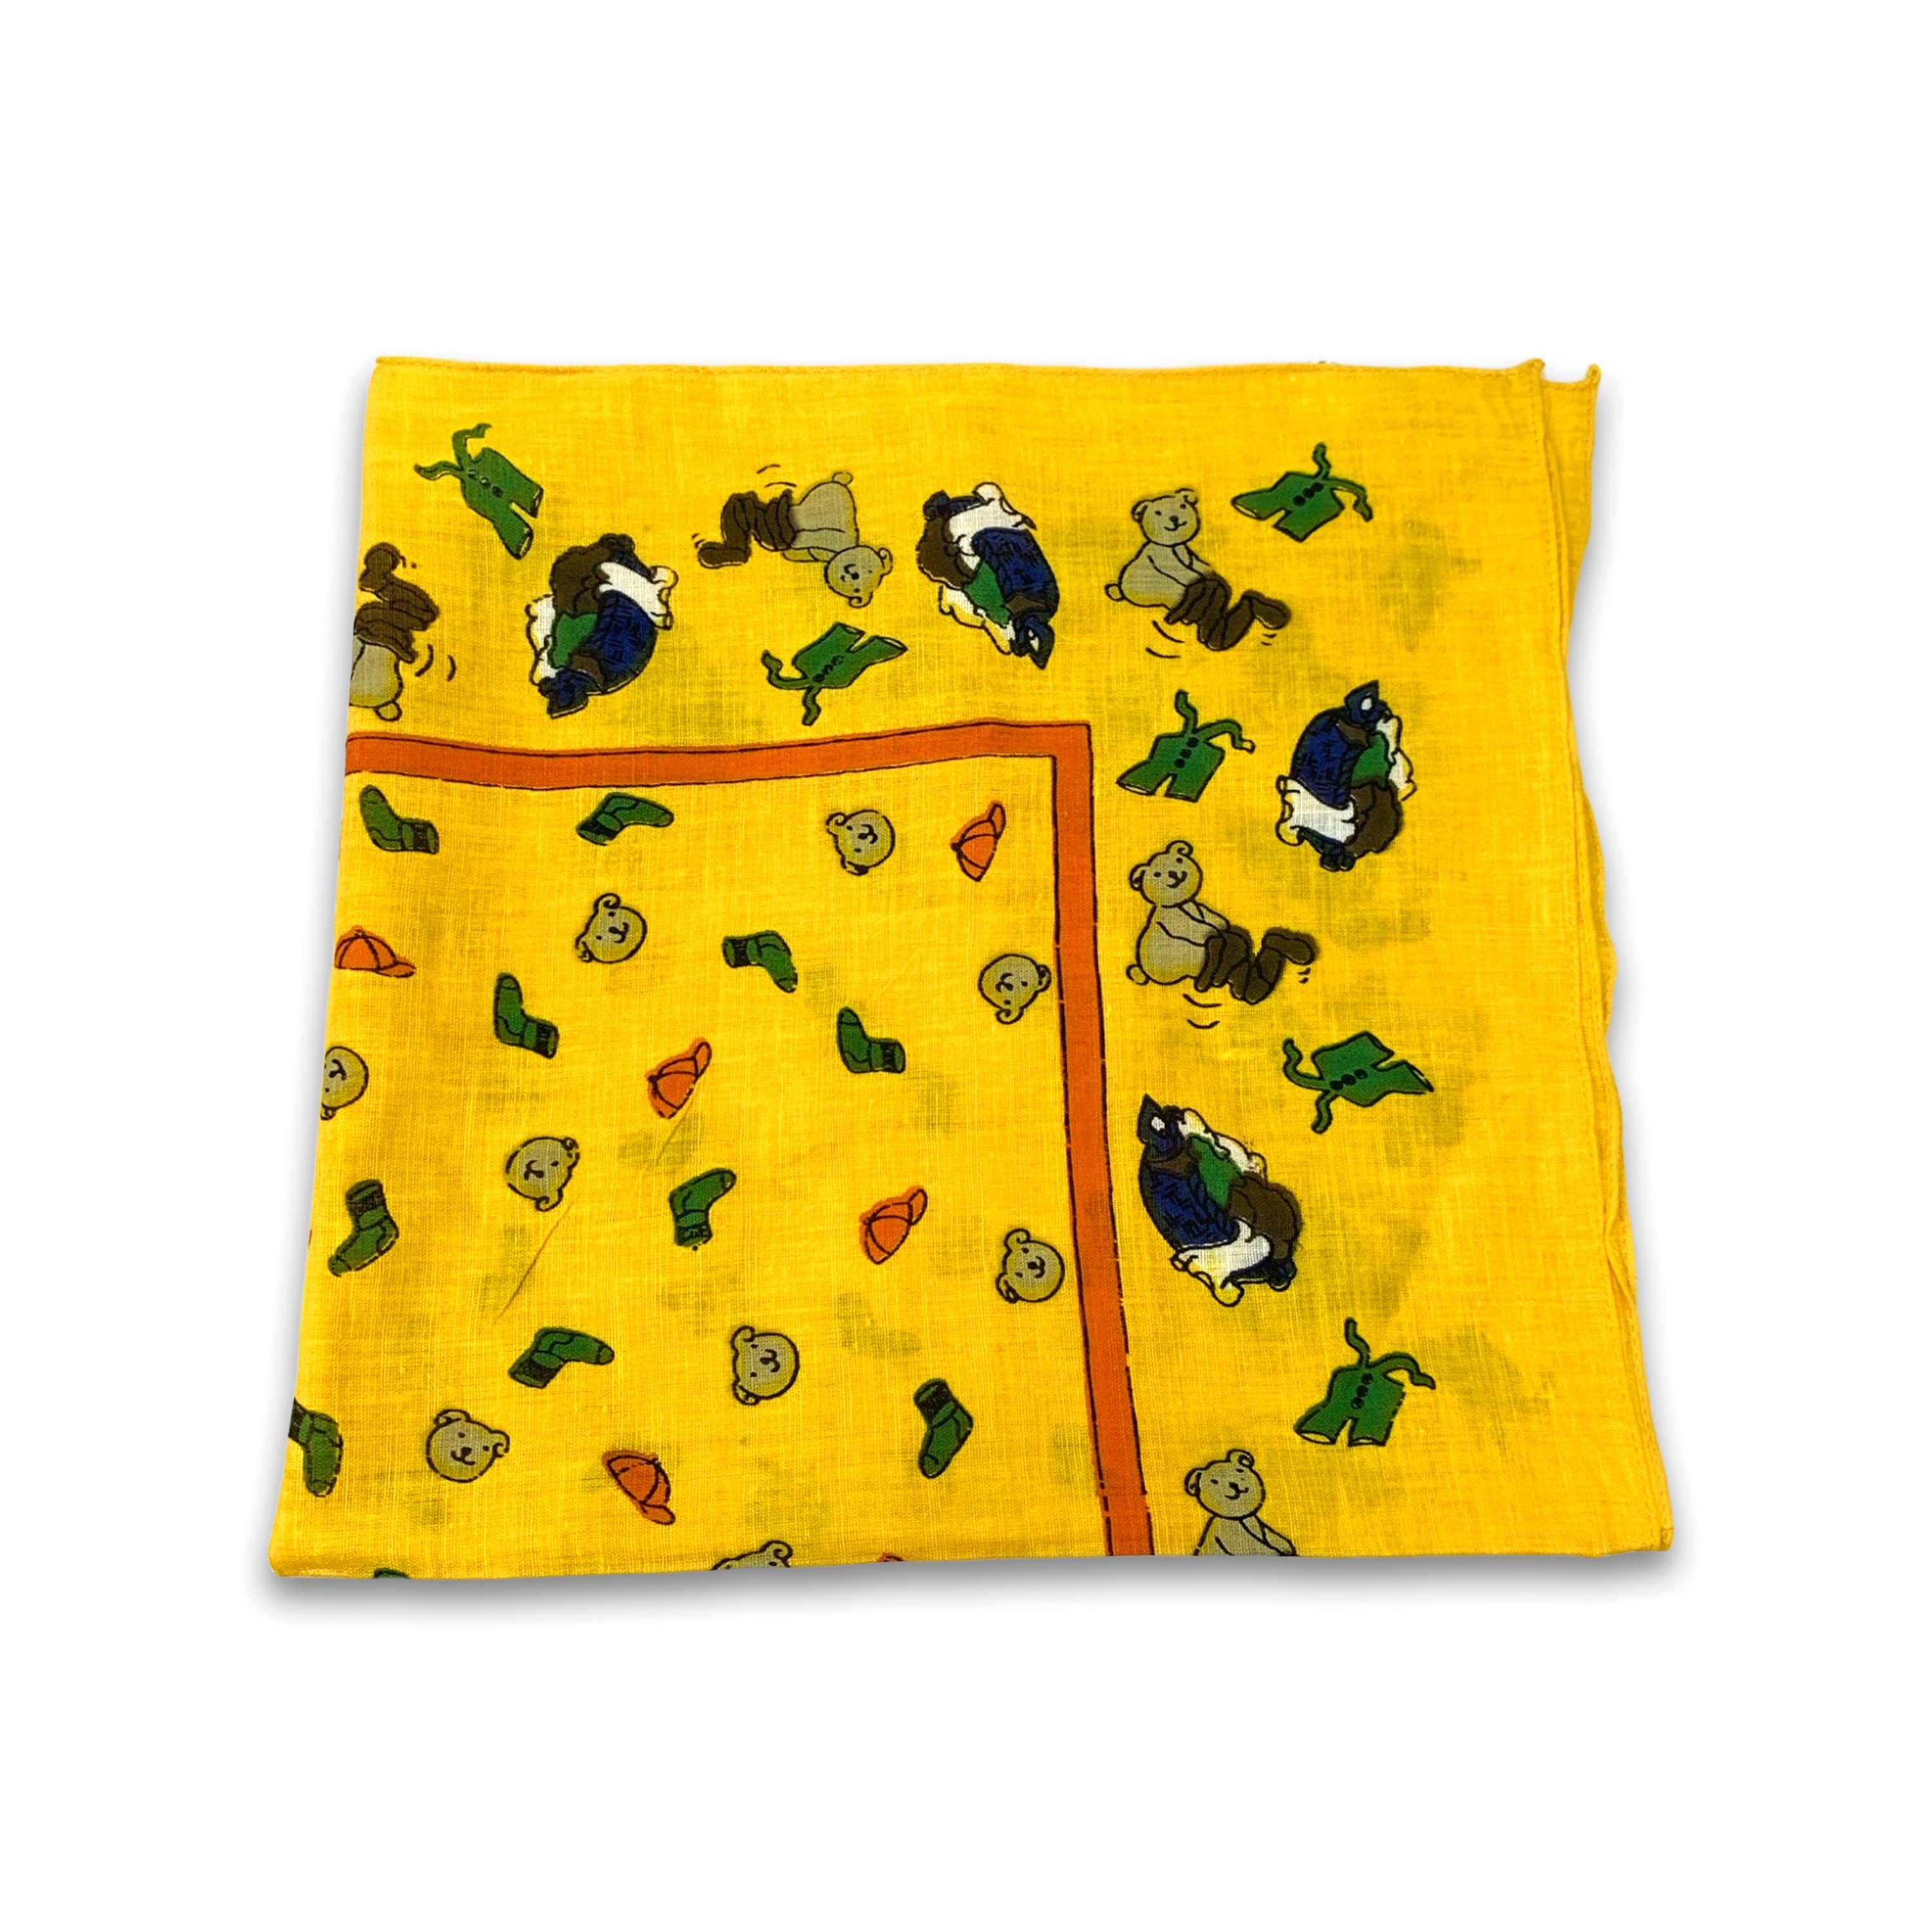 Friseurmeister Halstuch Schal Basic 50cm x 50cm - leichte tücher scarf halstücher halsband Gelb Bärchen Muster